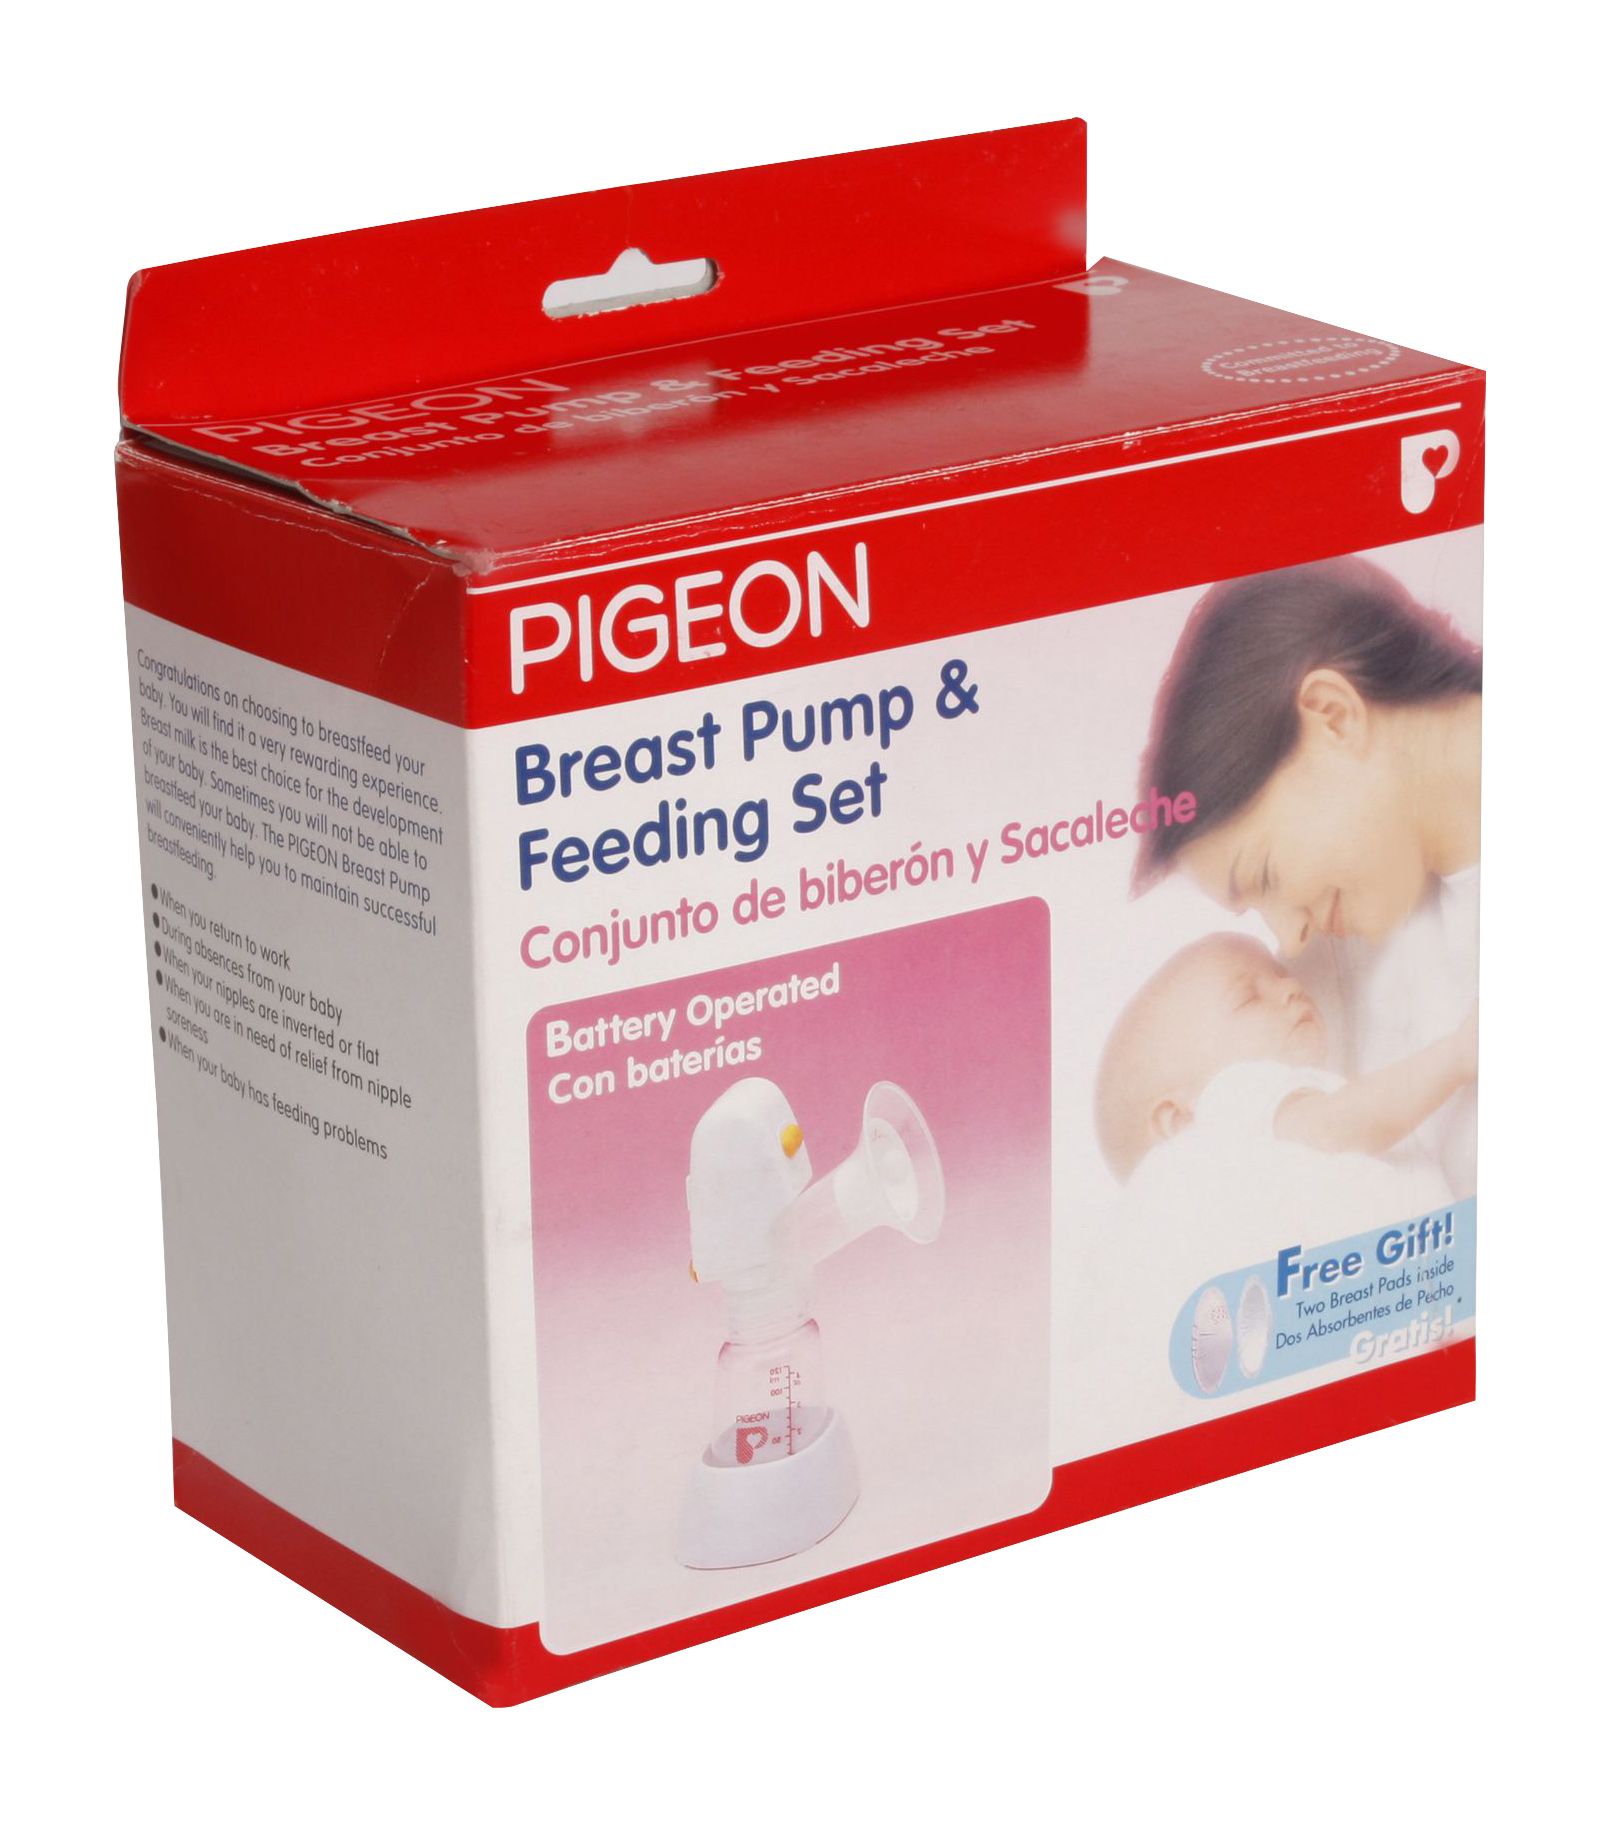 Pigeon - Breast Pump & Feeding Set